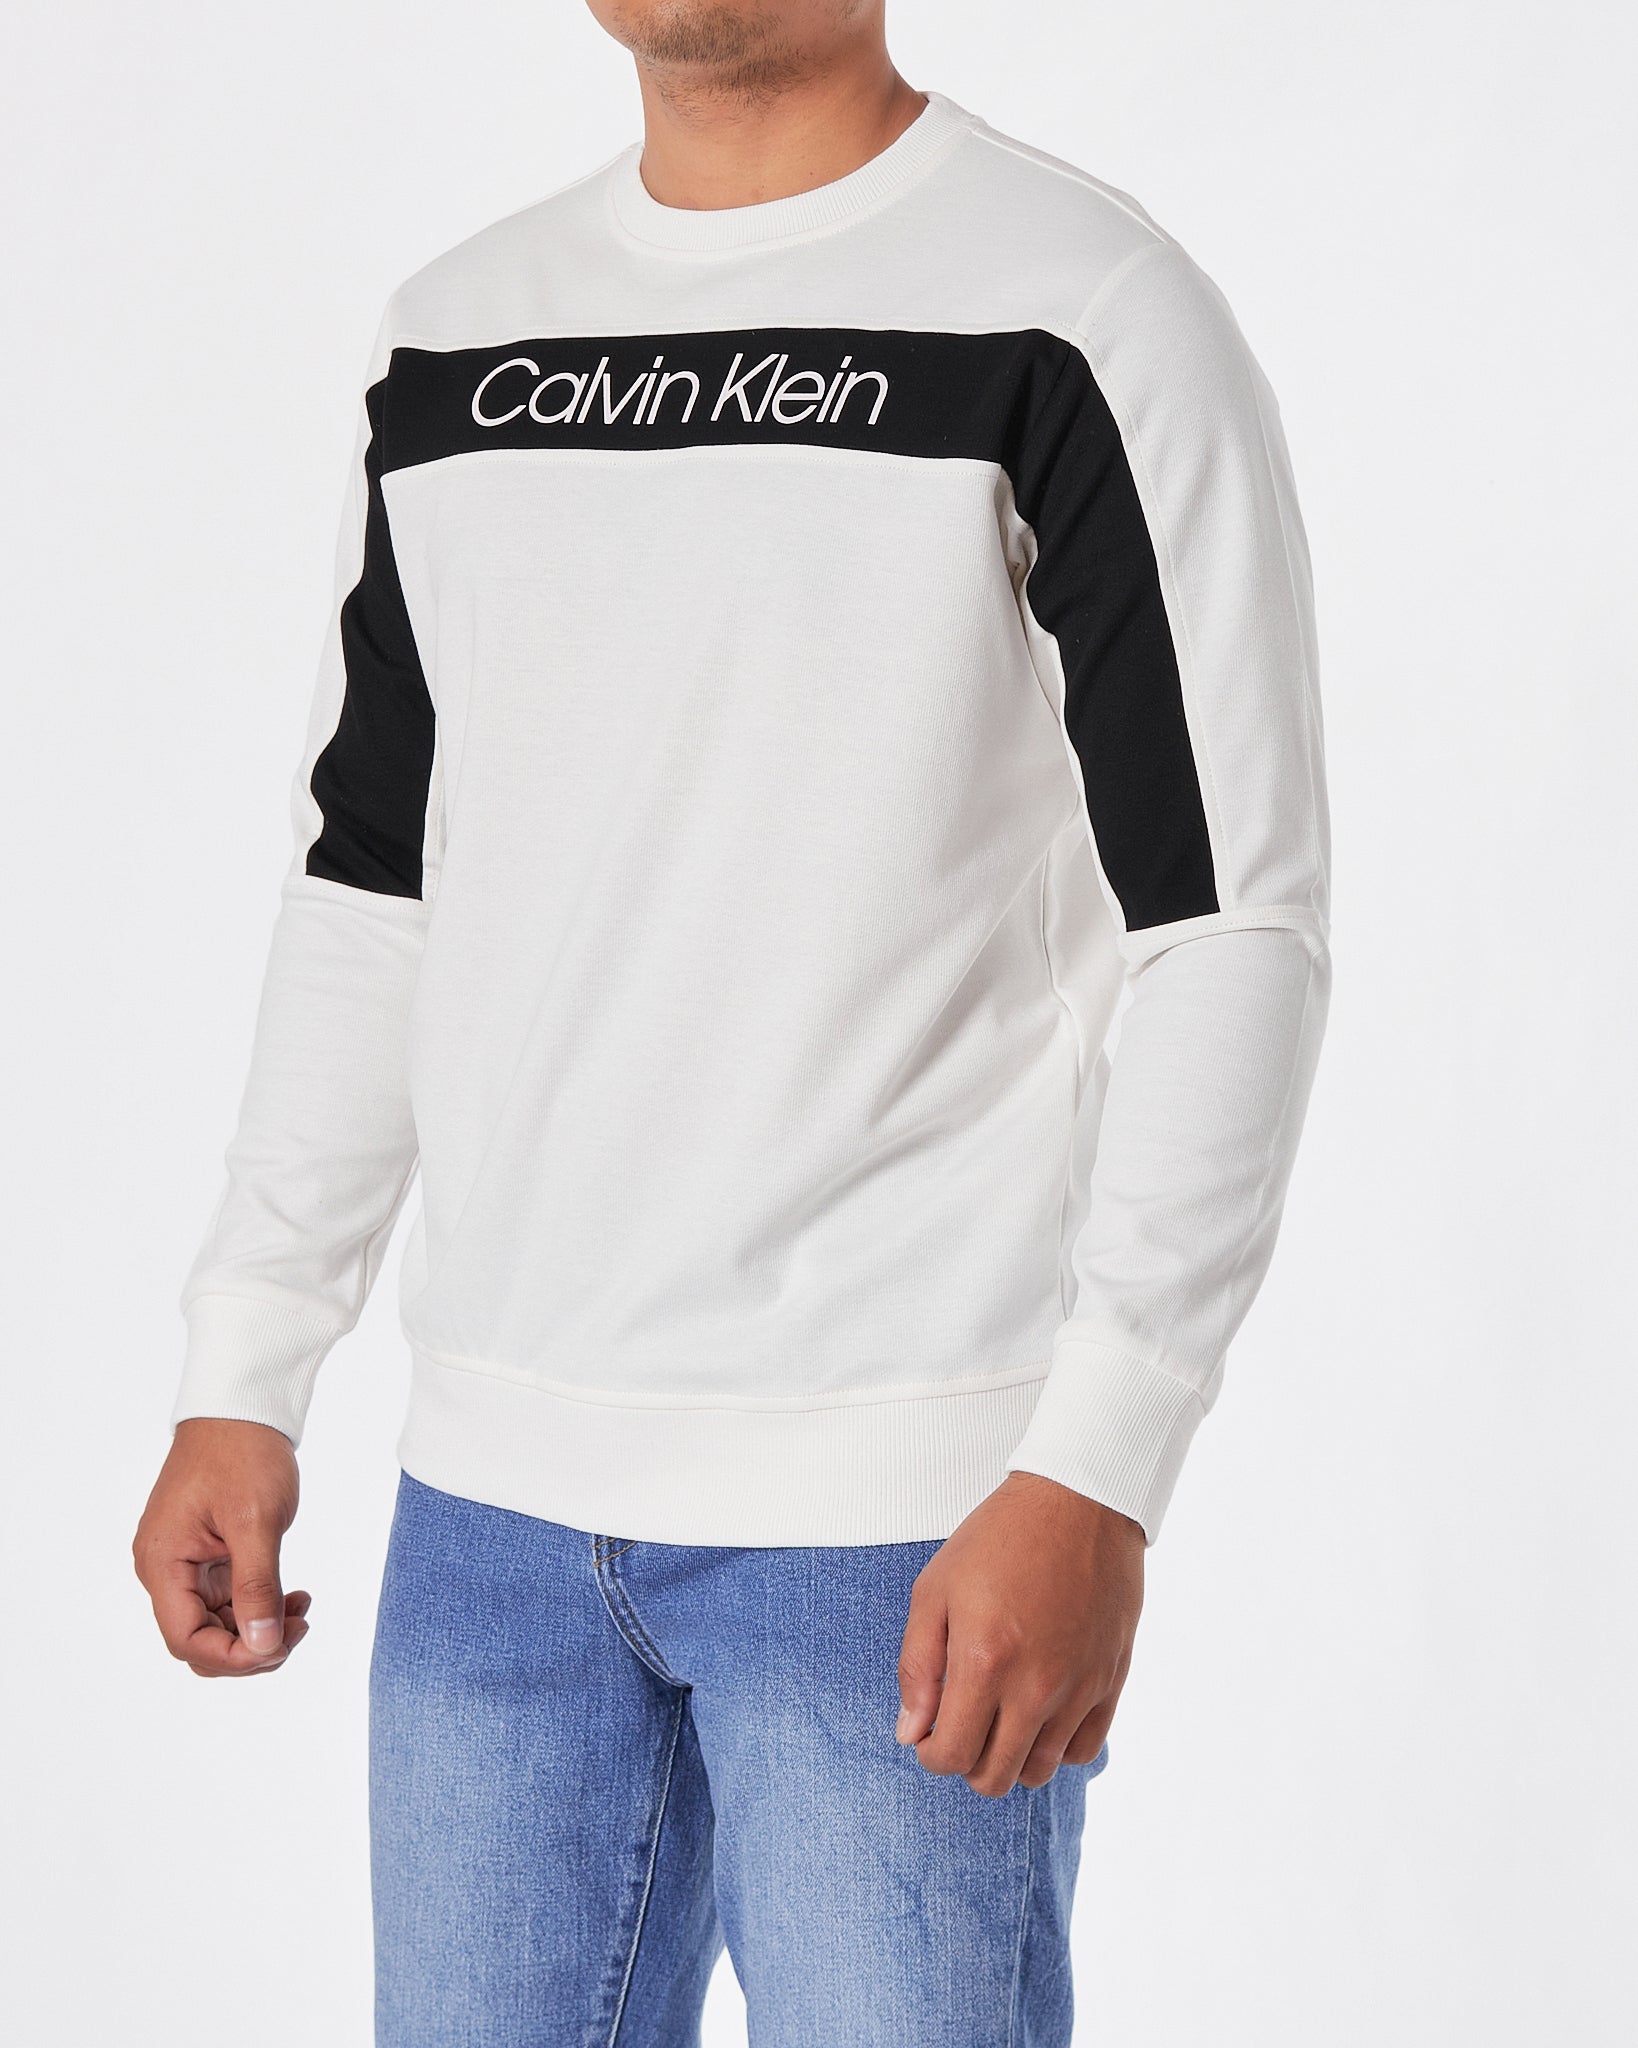 CK Color Block Men White Sweater 25.90